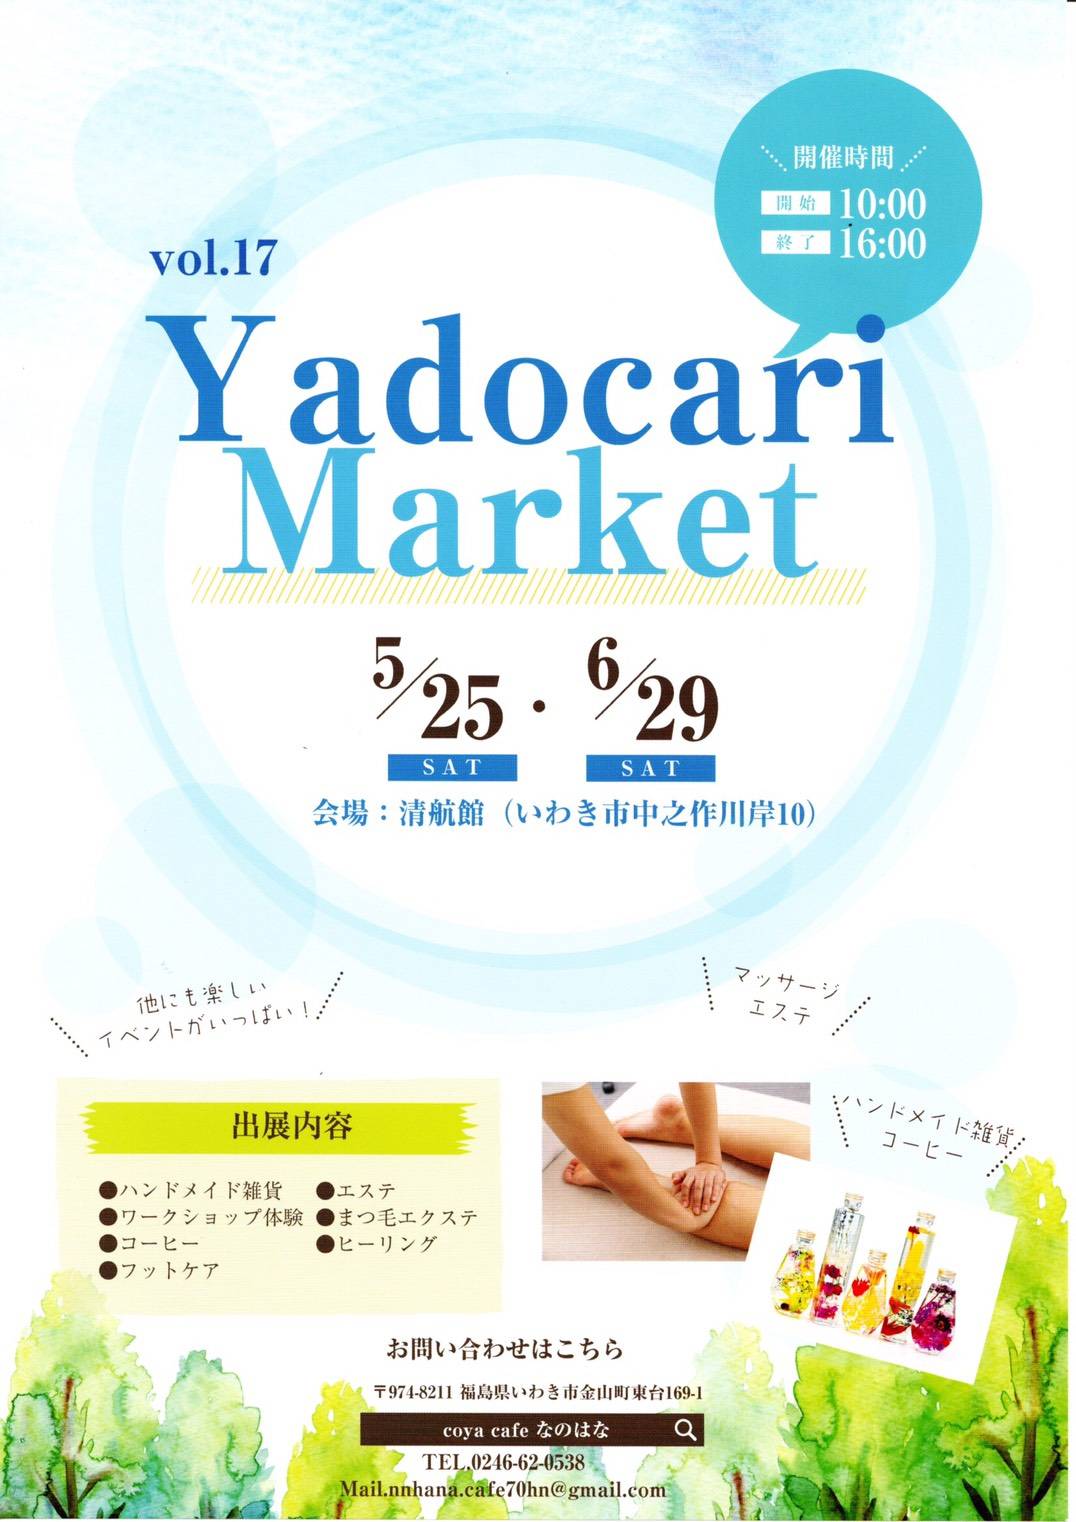 Yadocari Market vol.17